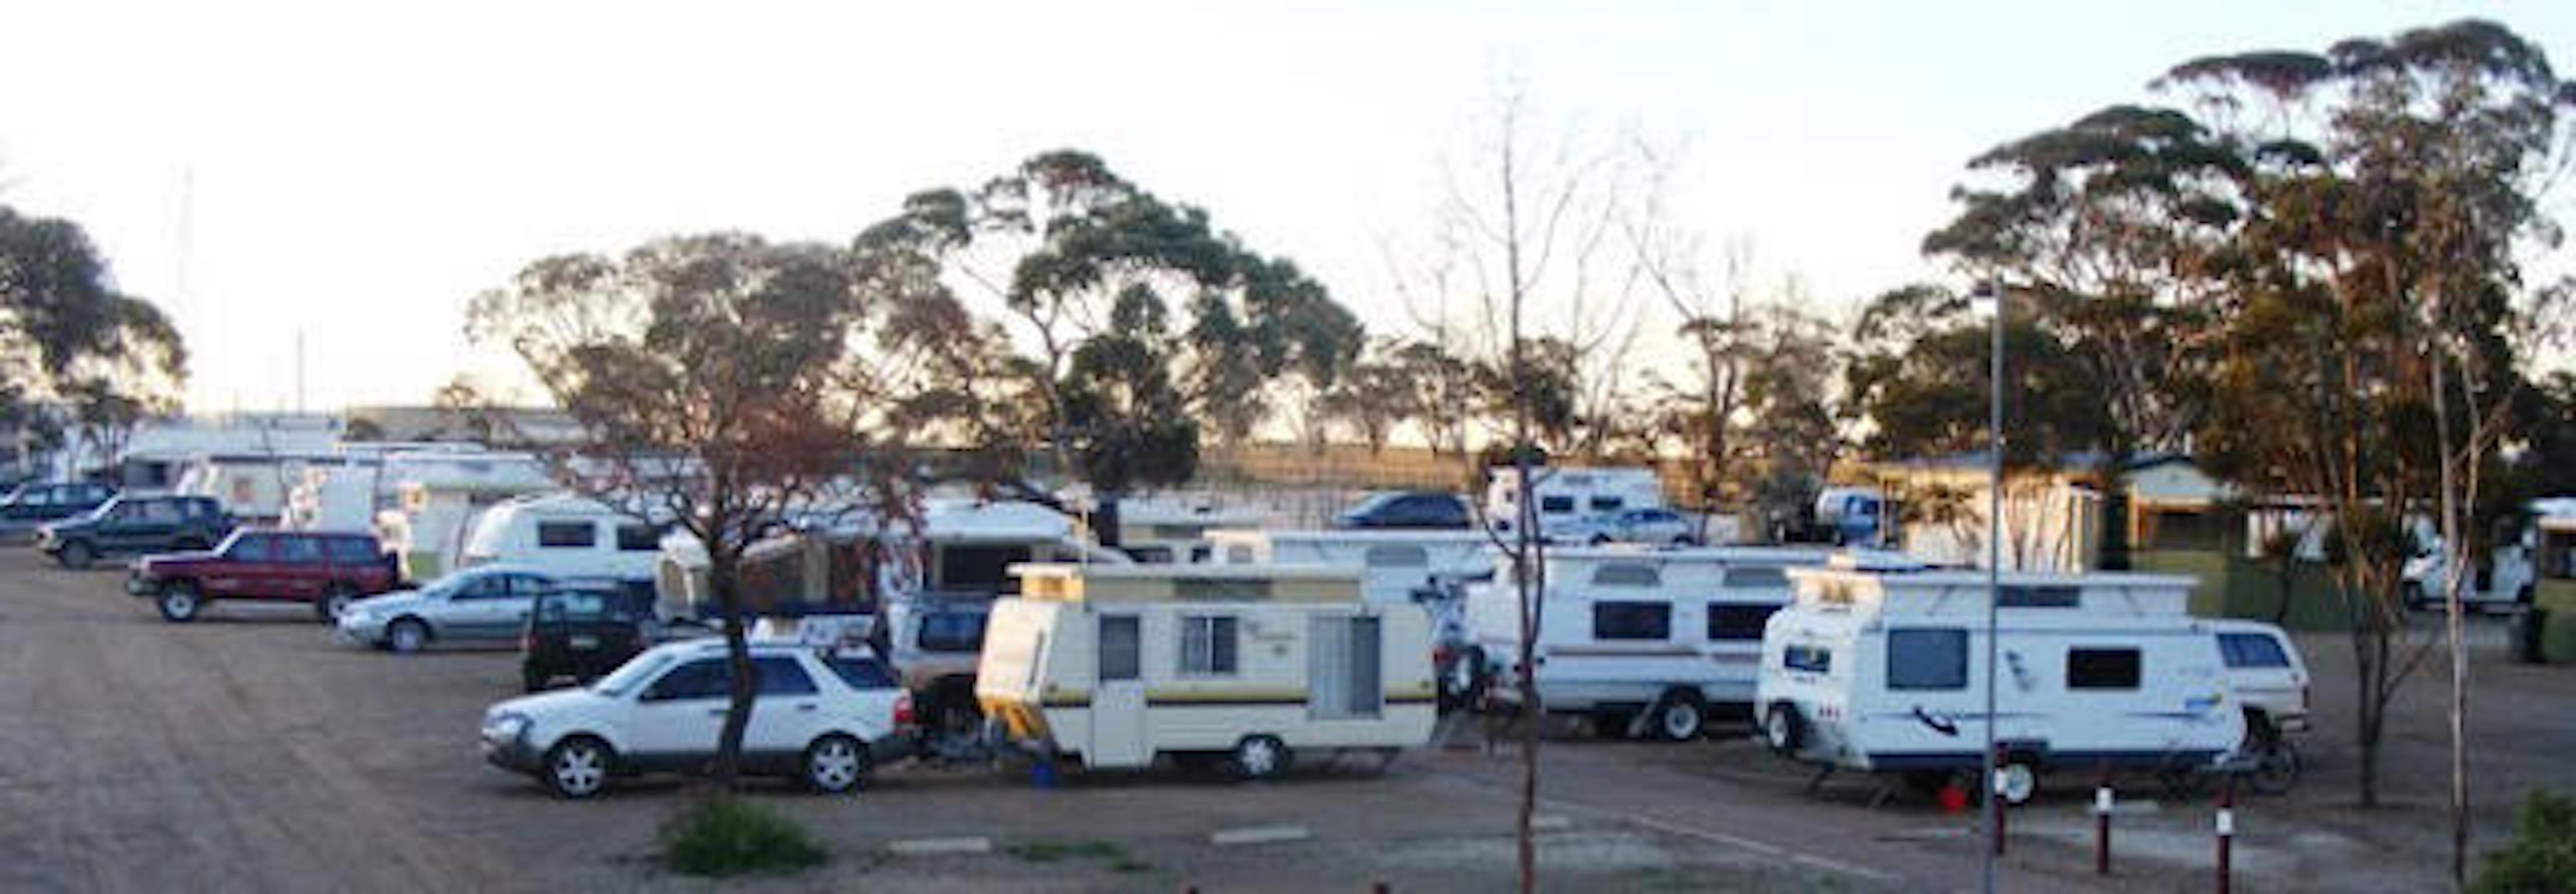 Woomera Traveller's Village and Caravan Park - Casino Accommodation